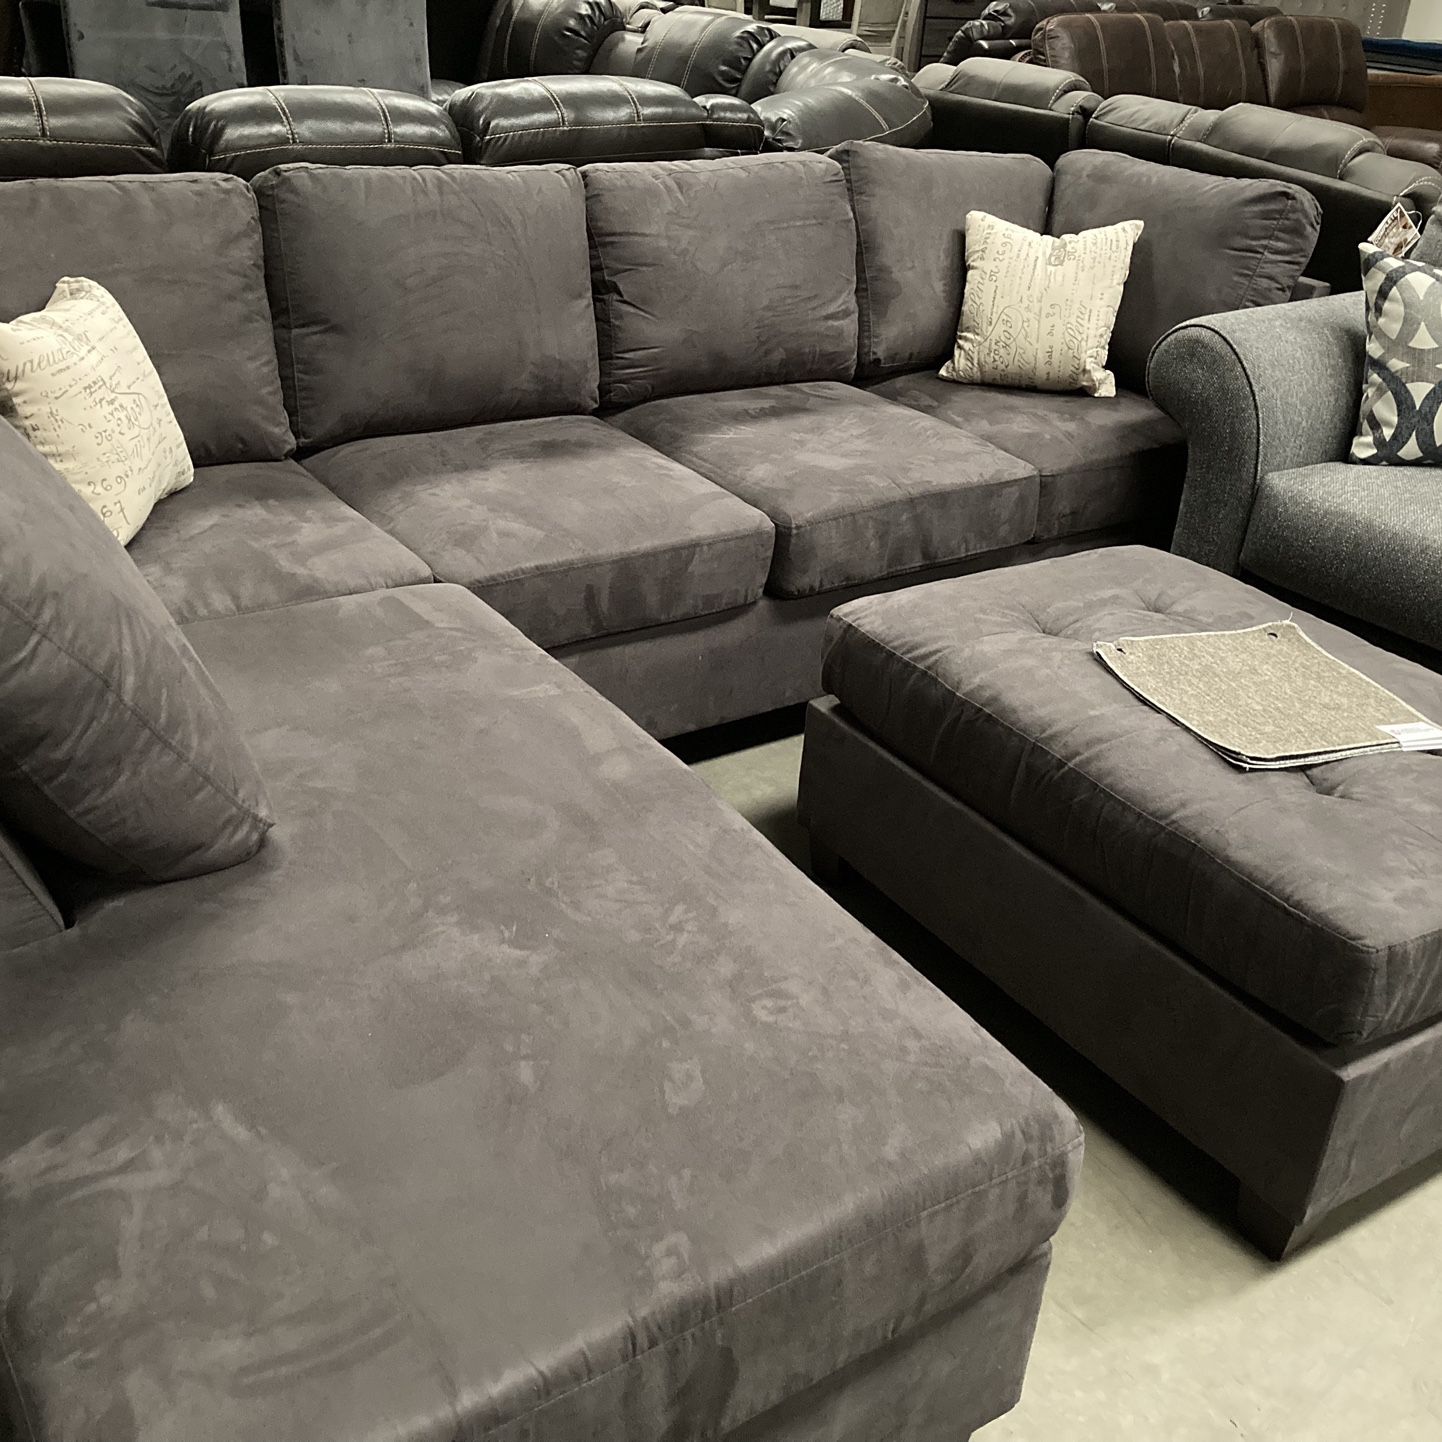 Gray Sectional Sofa With Ottoman $795